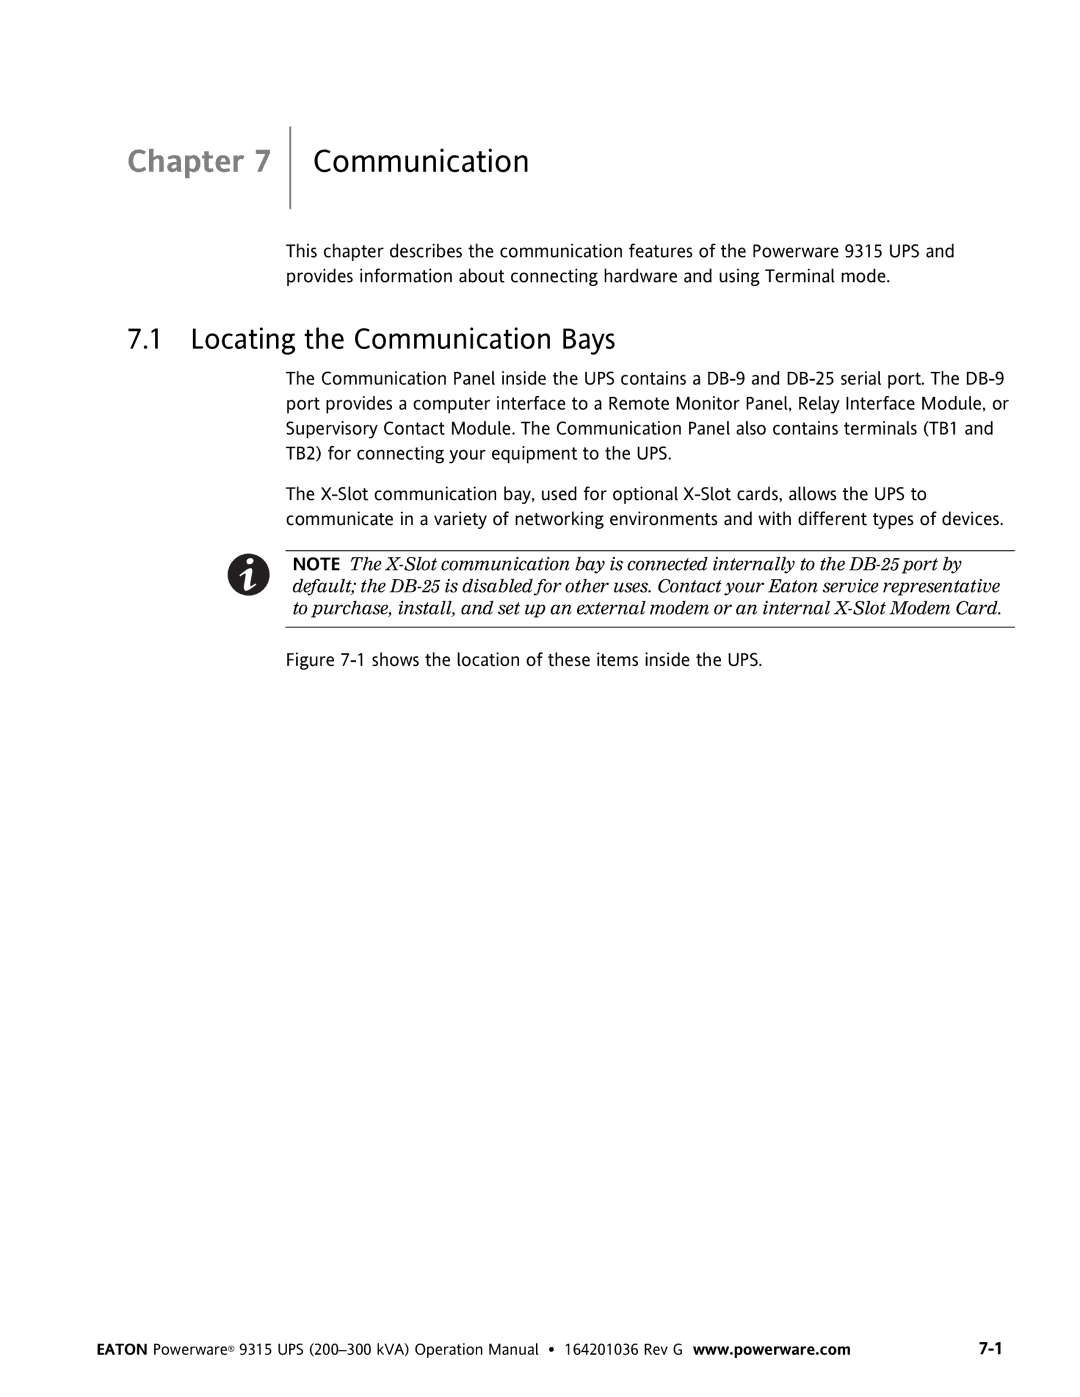 Powerware 9315 UPS operation manual Locating the Communication Bays 